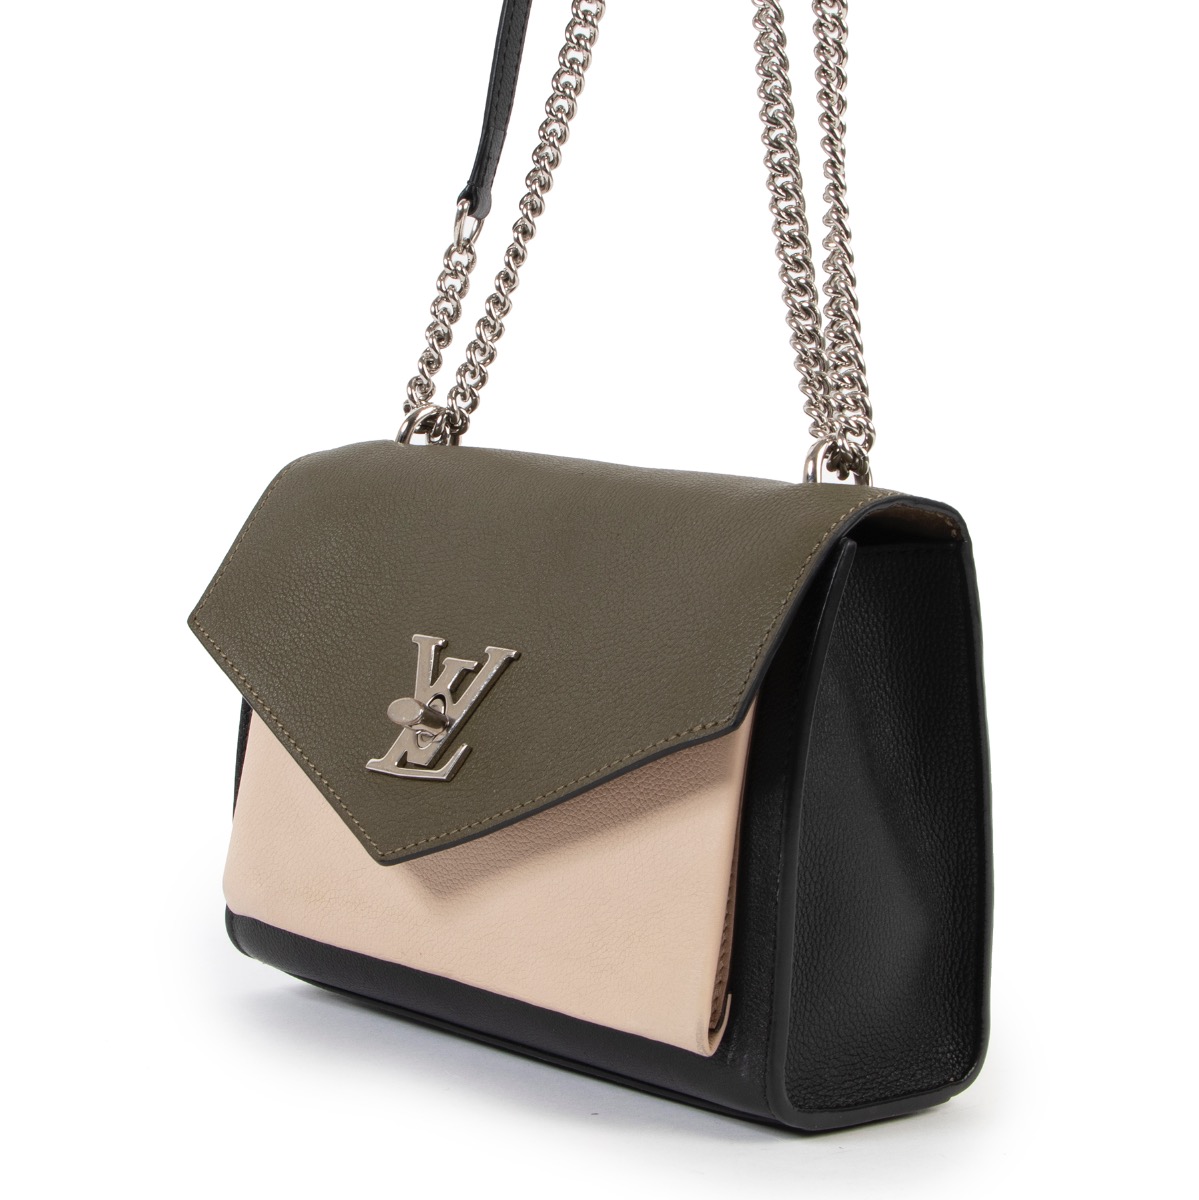 Chain bag leather handbag Louis Vuitton Multicolour in Leather - 21328043